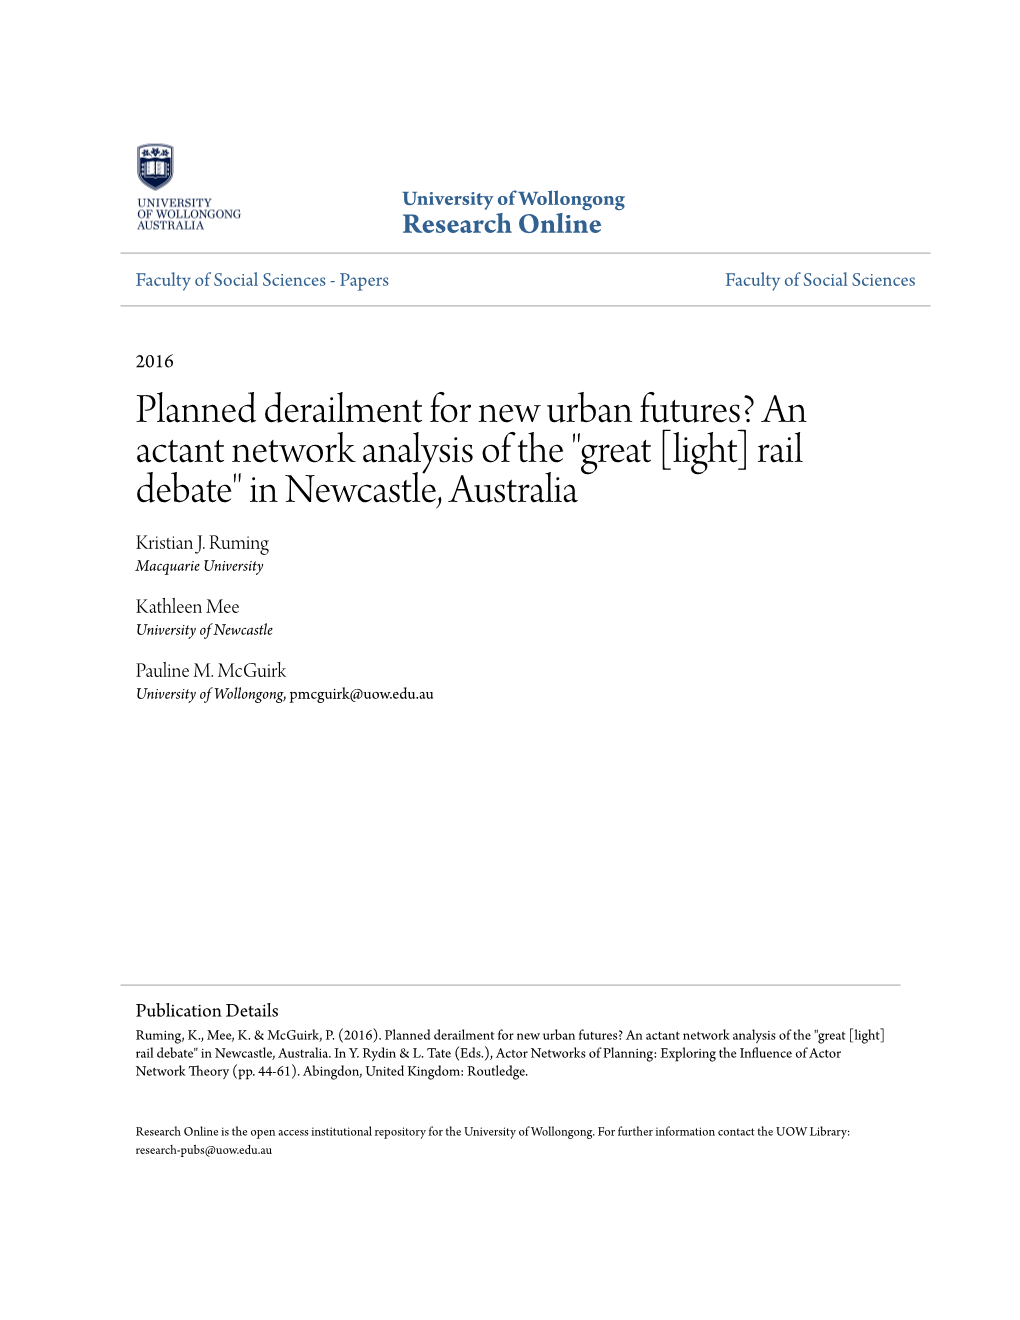 An Actant Network Analysis of the "Great [Light] Rail Debate" in Newcastle, Australia Kristian J